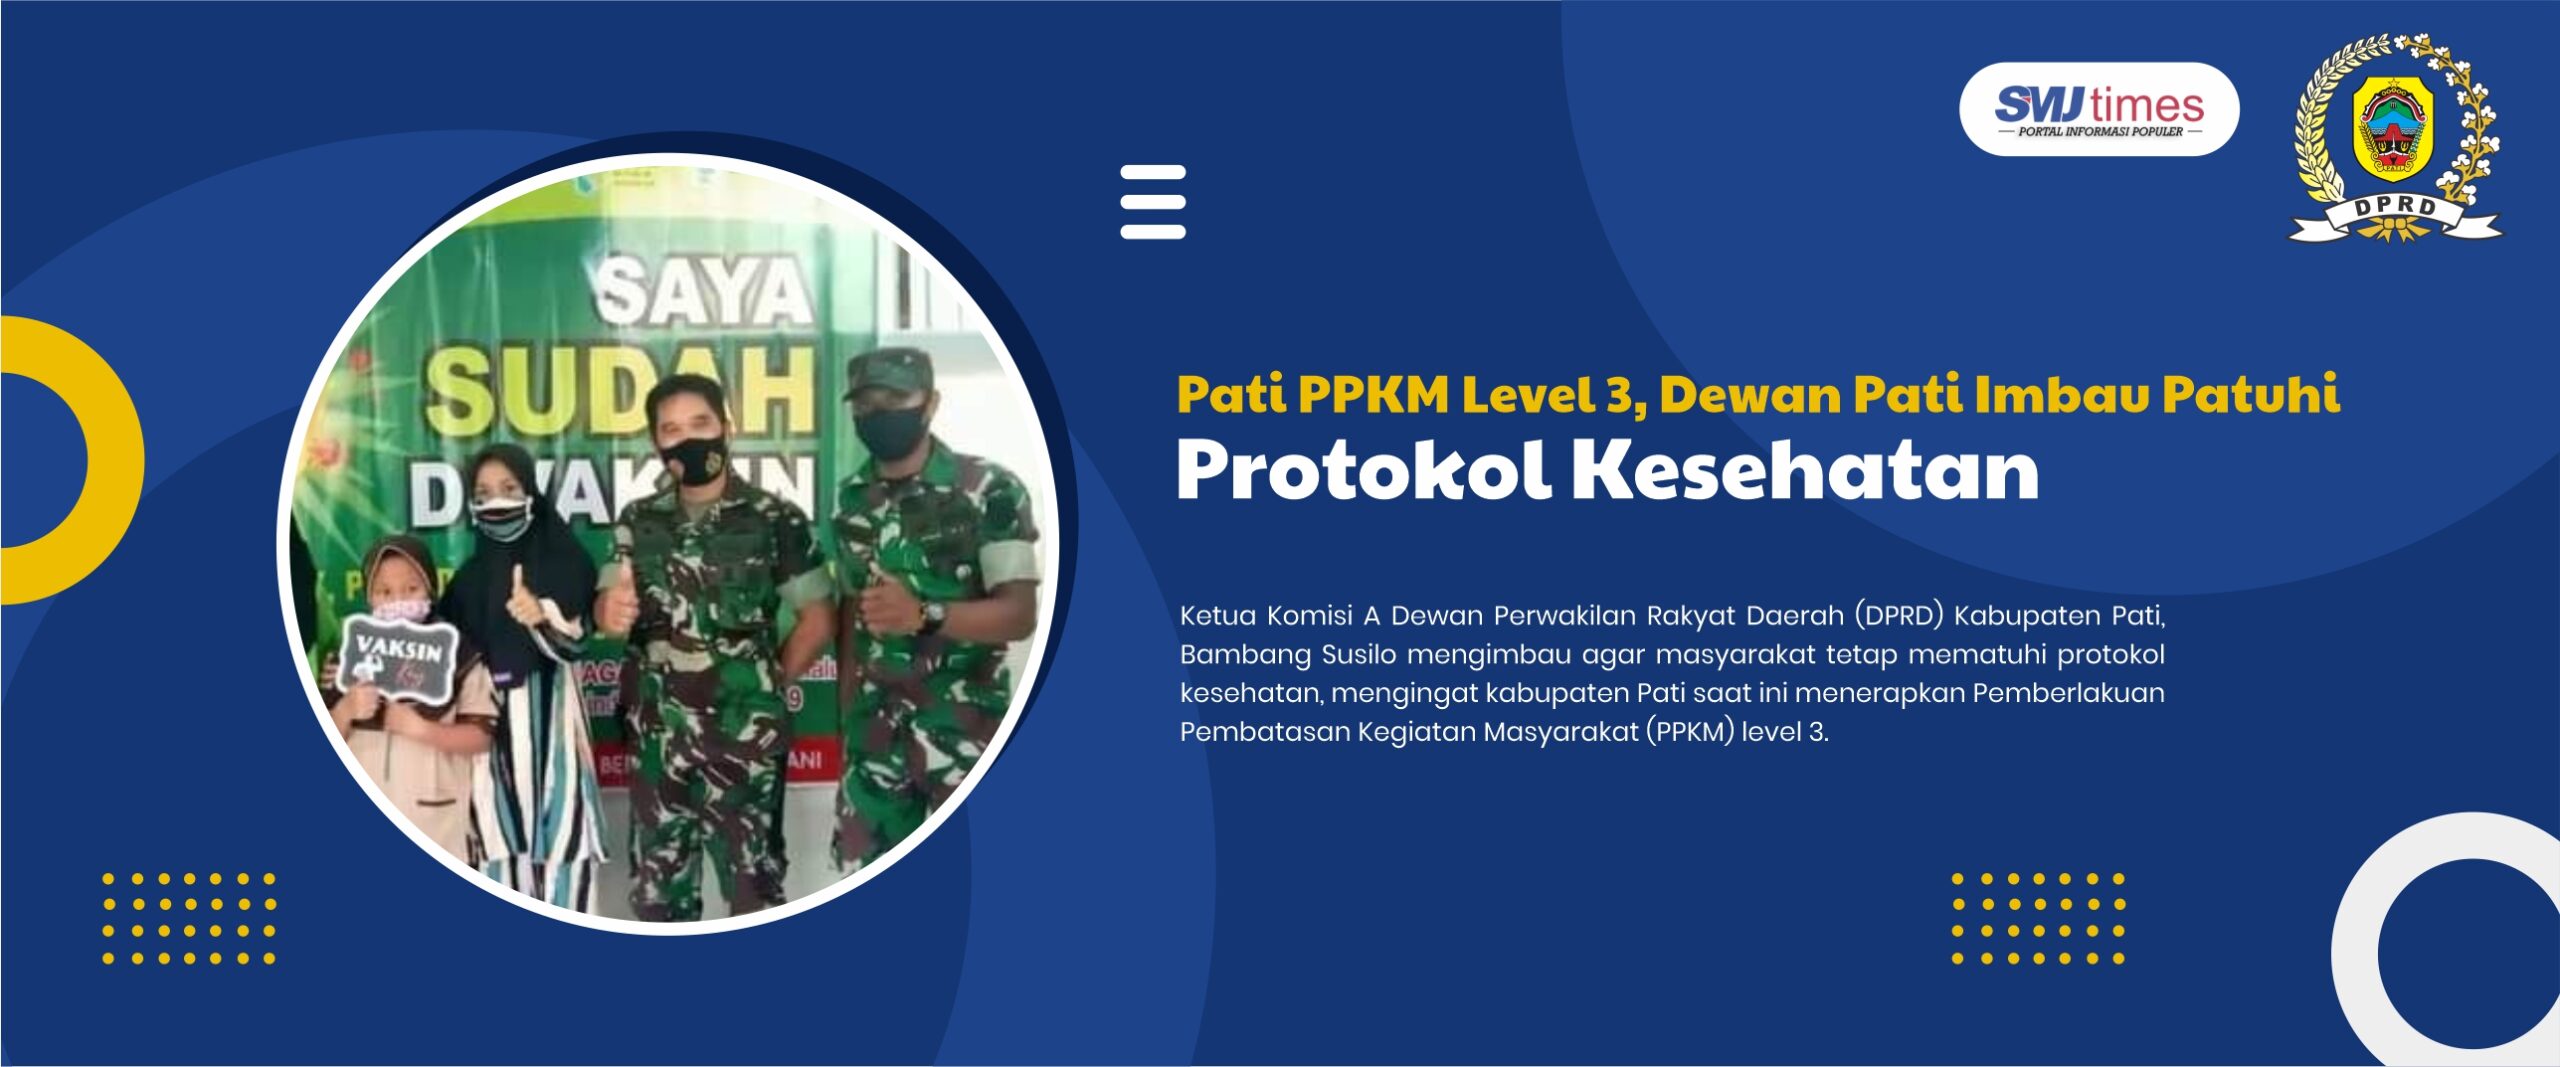 Pati_PPKM_Level_3,_Dewan_Pati_Imbau_Patuhi_Protokol_Kesehatan